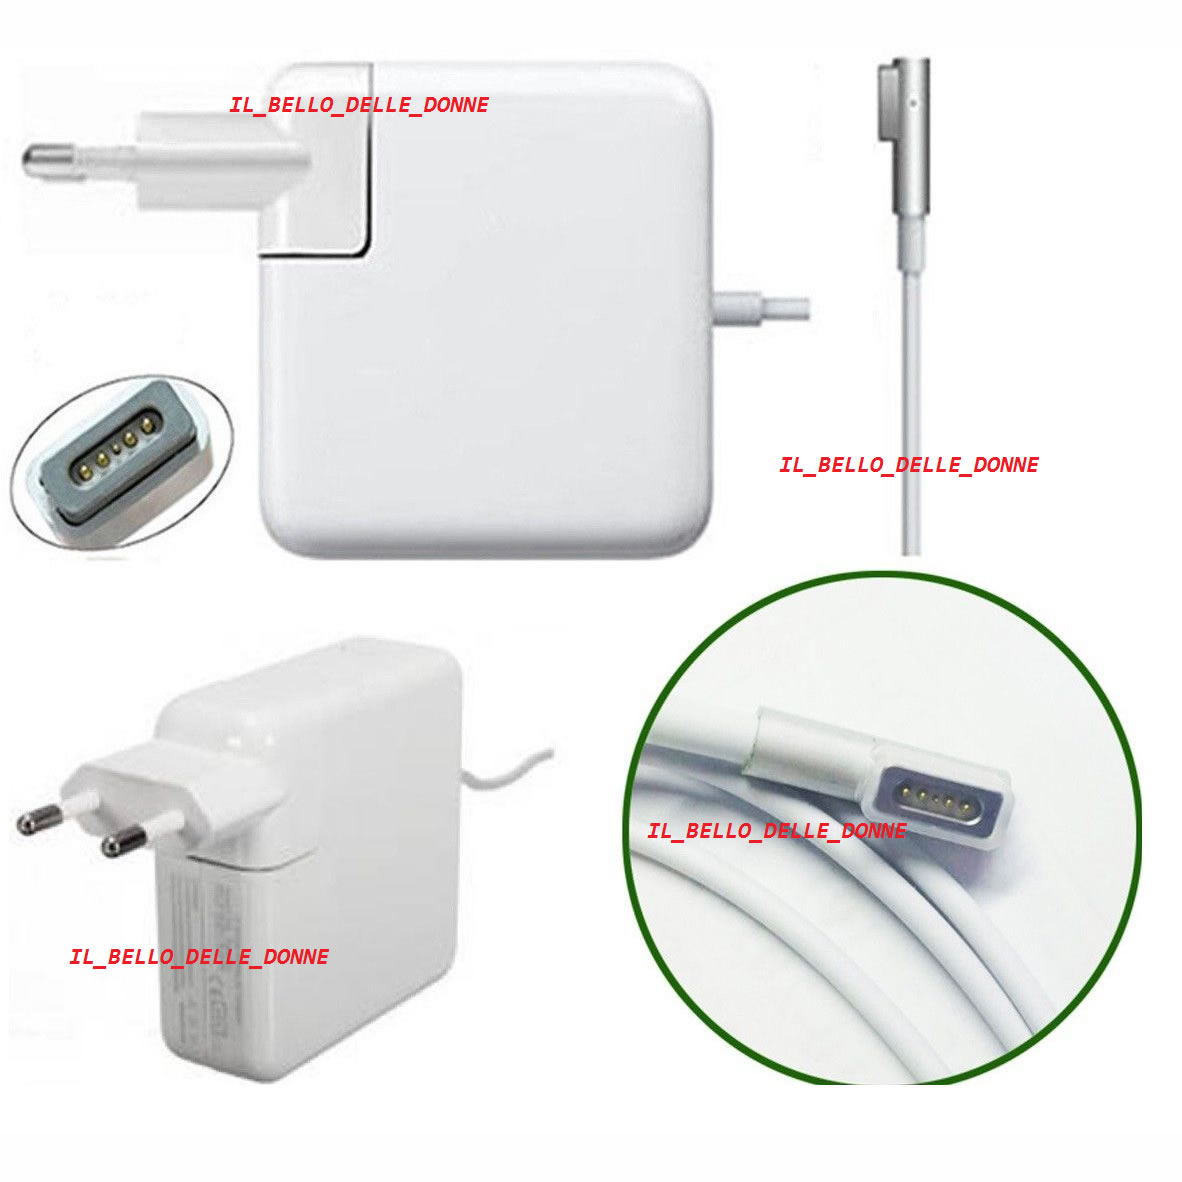 apple ma538ll/b laptop ac adapter